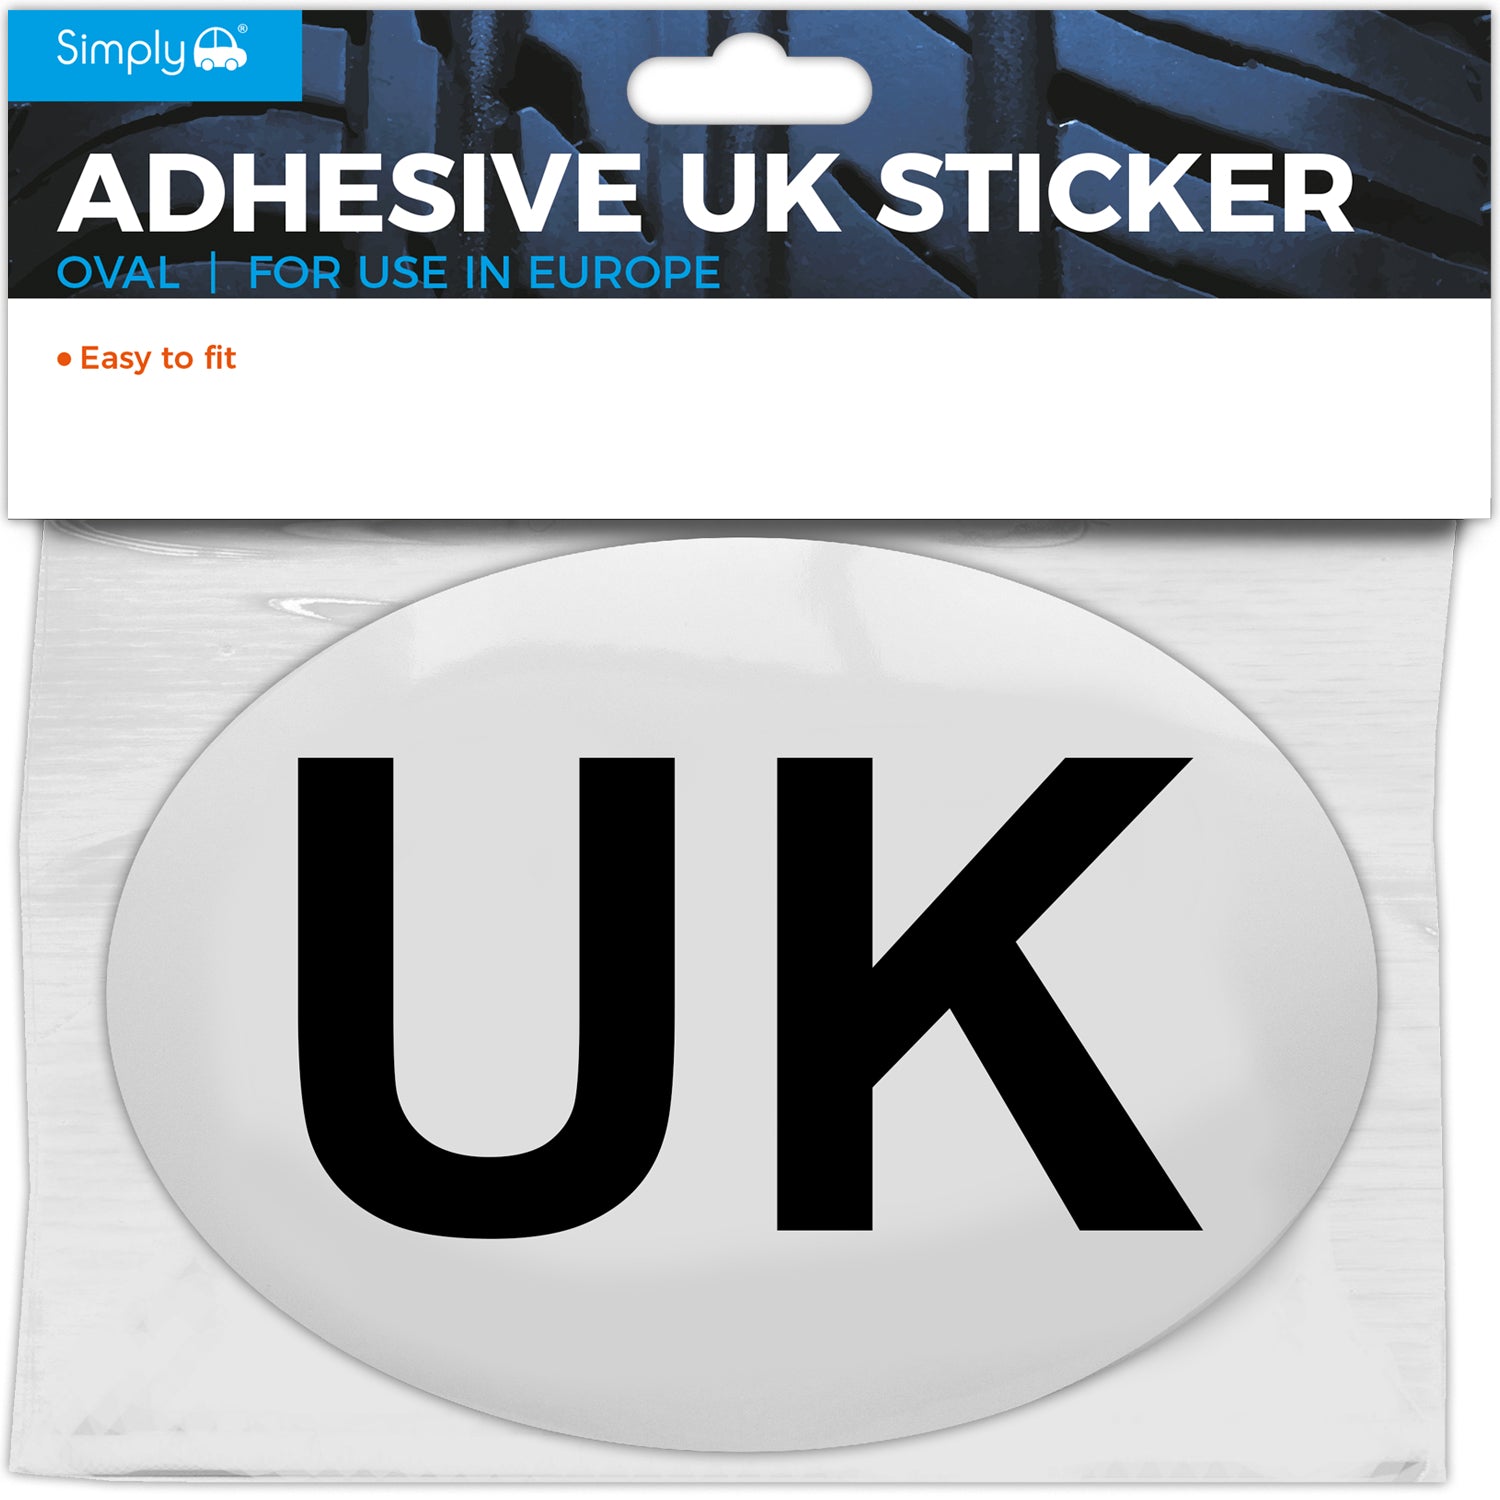 Simply Auto Oval UK Adhesive Sticker